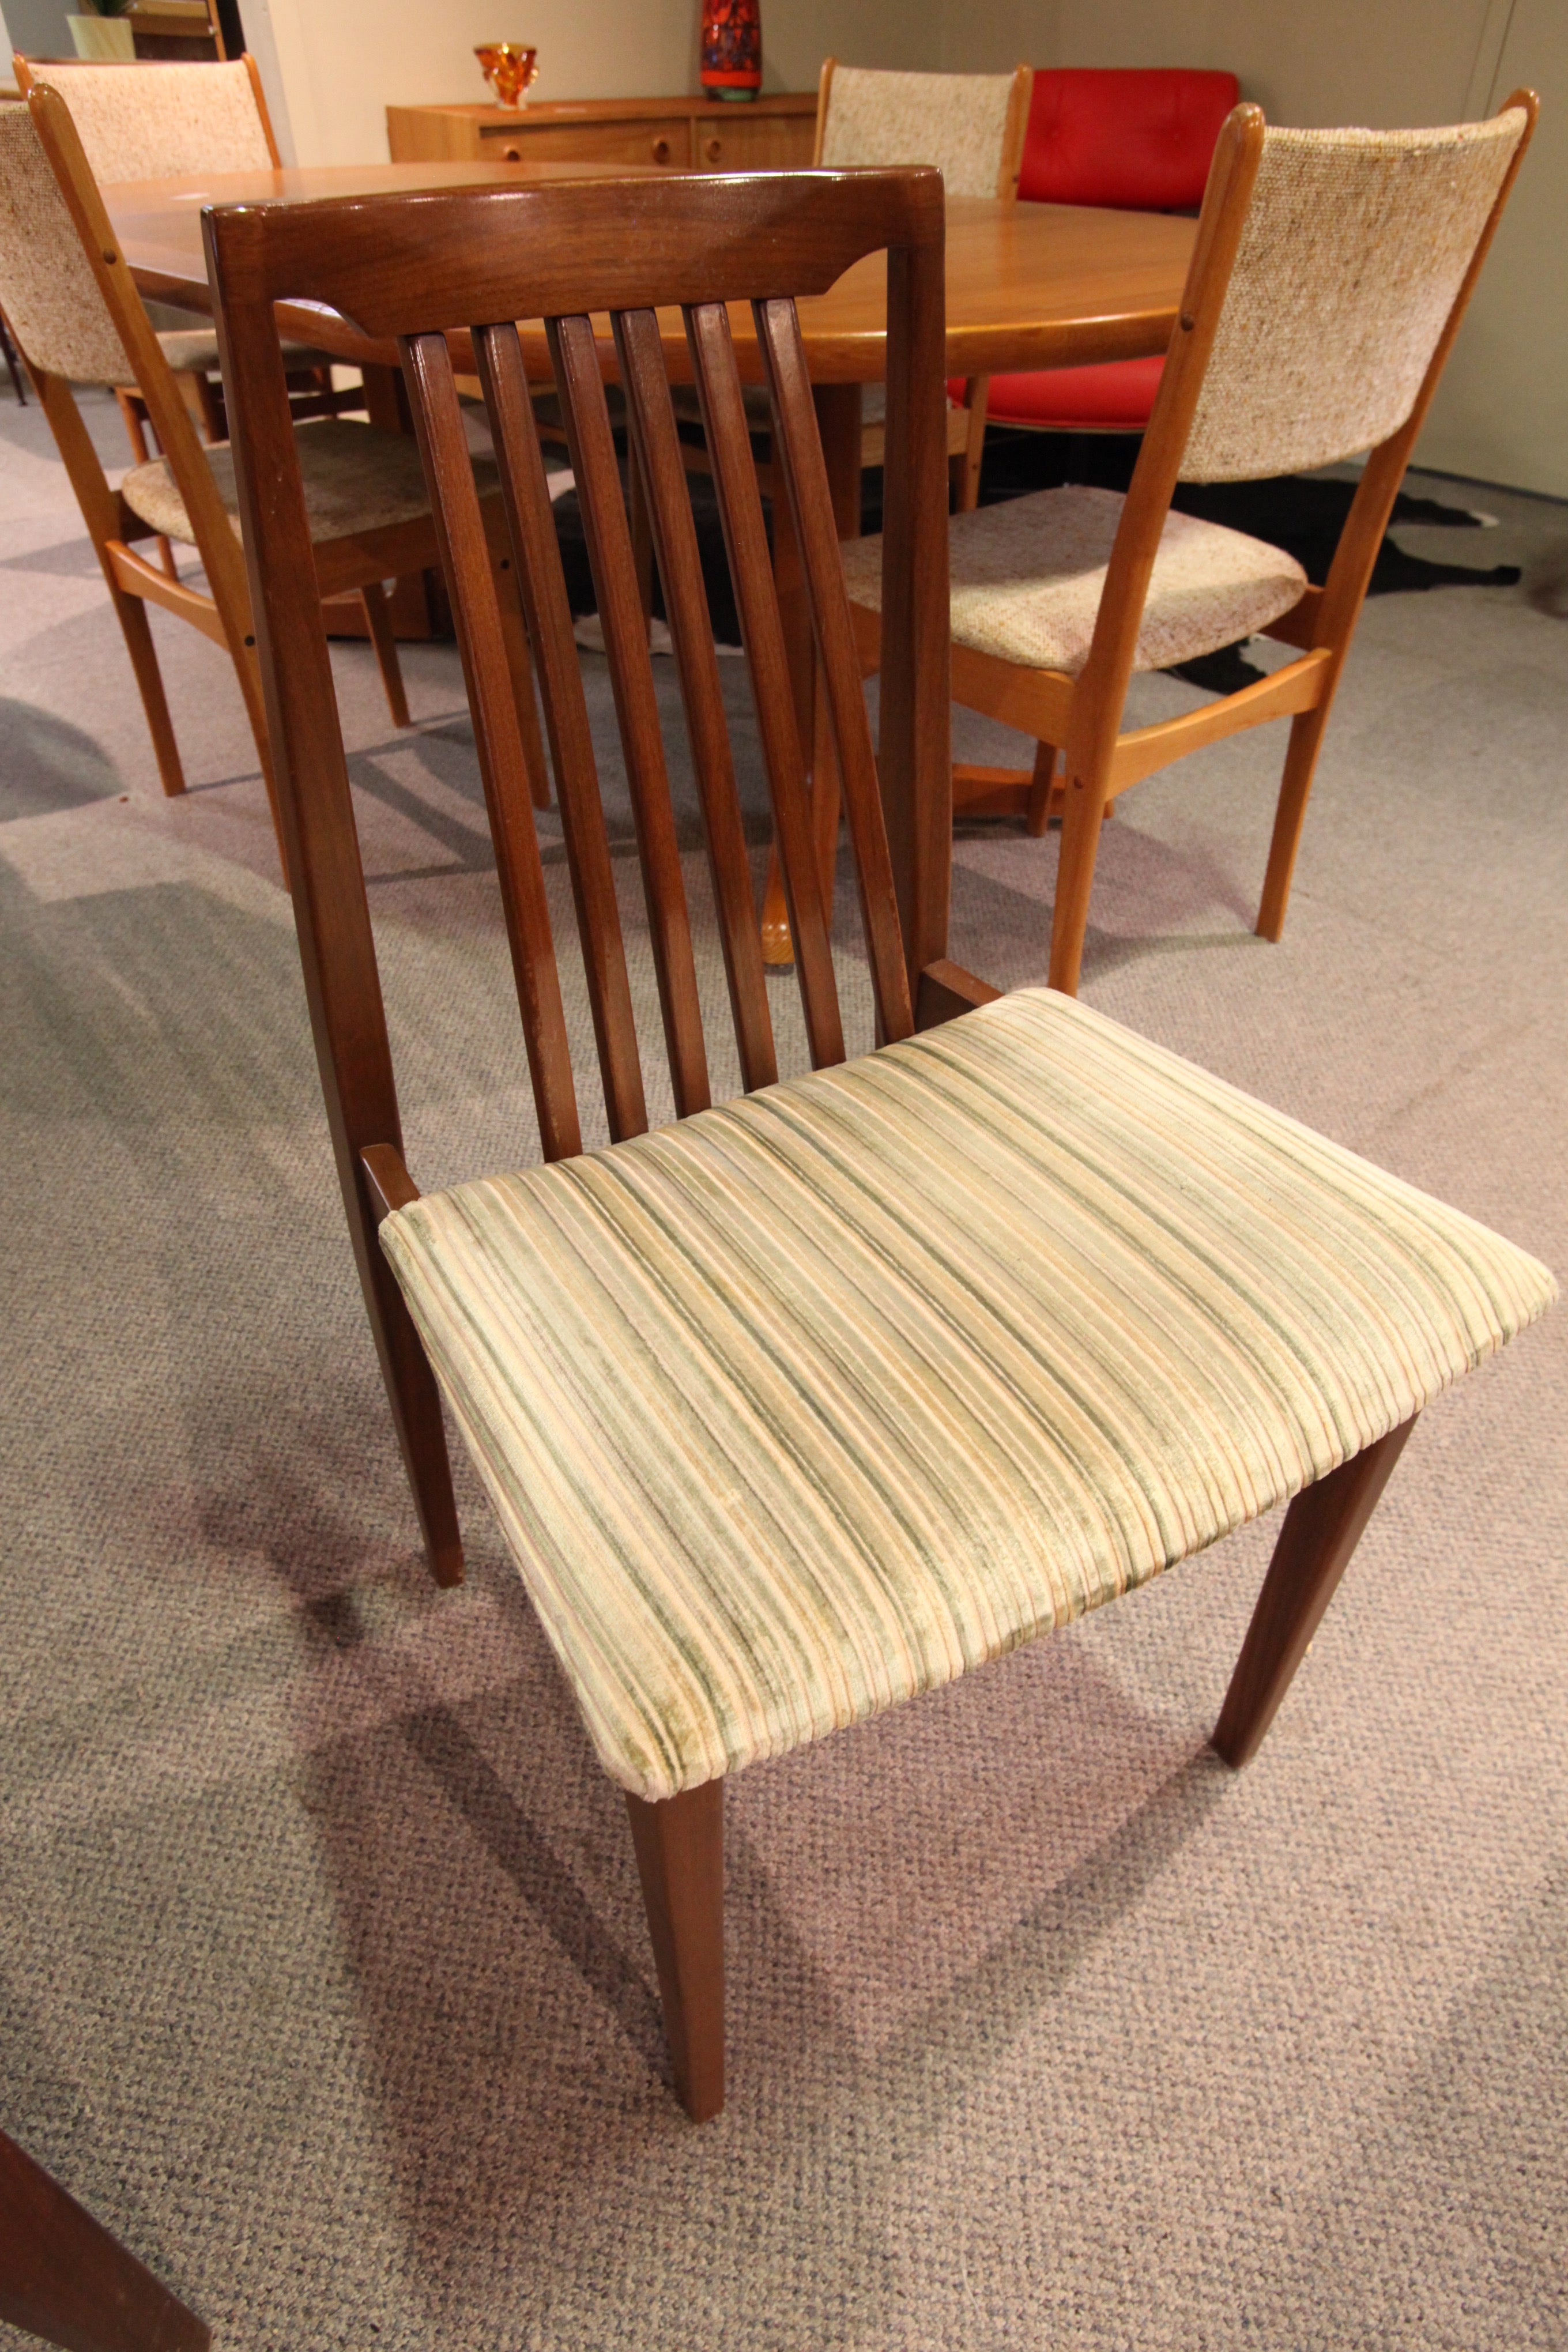 Set of 4 Honderich Walnut chairs (1960)